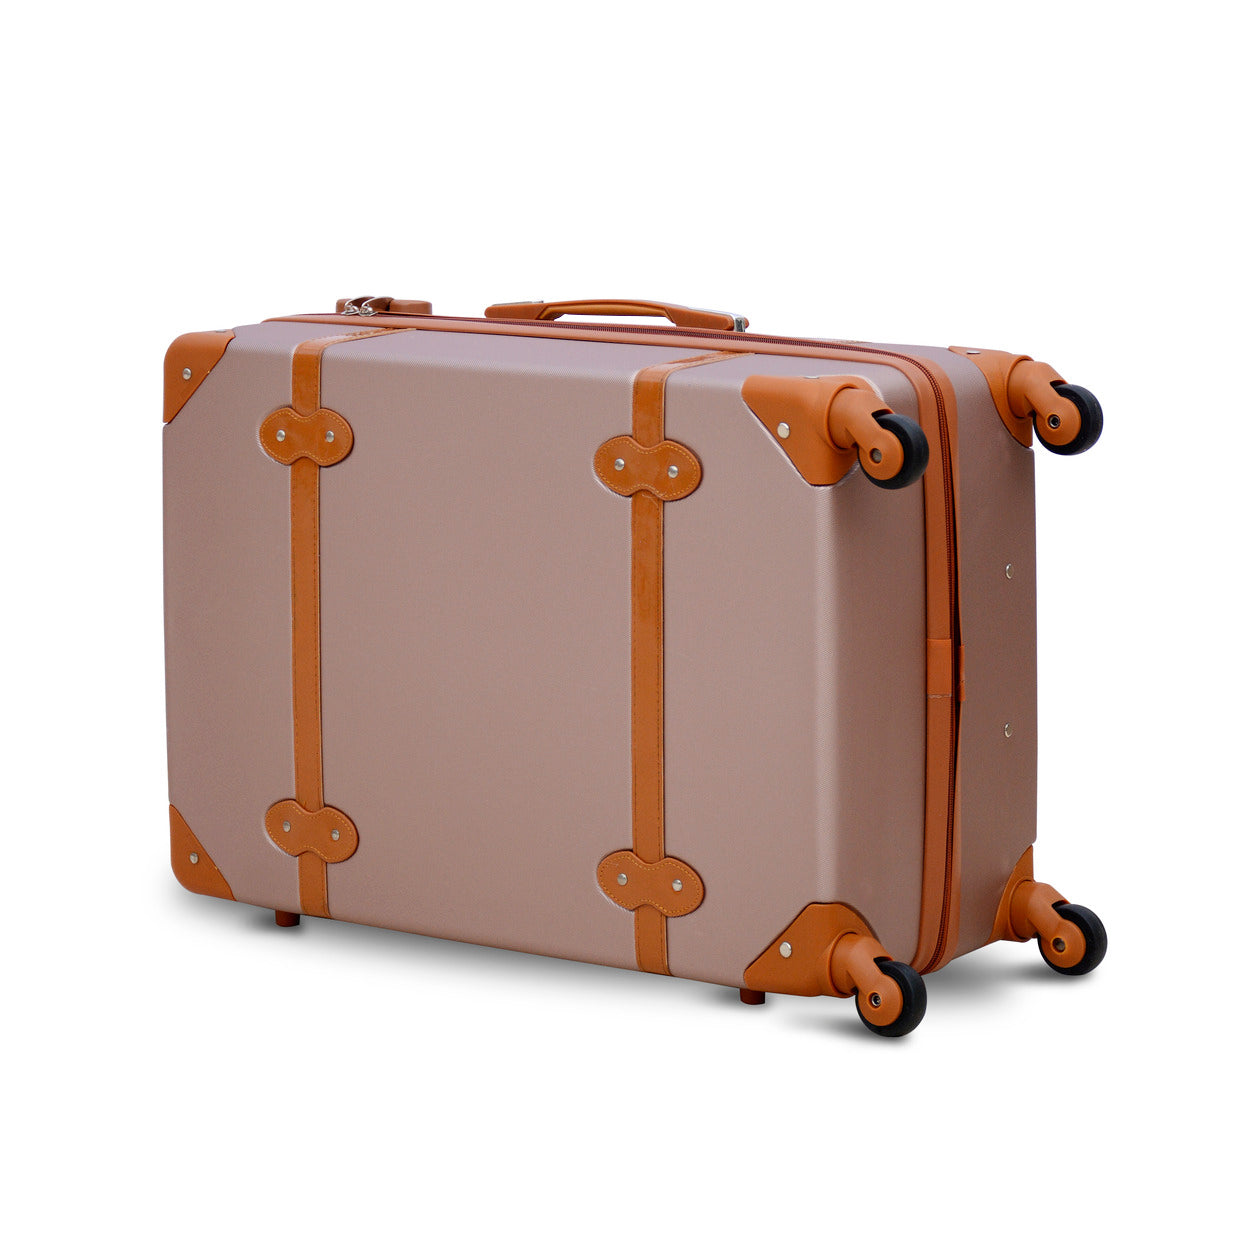 28" Lightweight ABS Corner Guard Luggage | Rose Gold Hard Case Trolley Bag